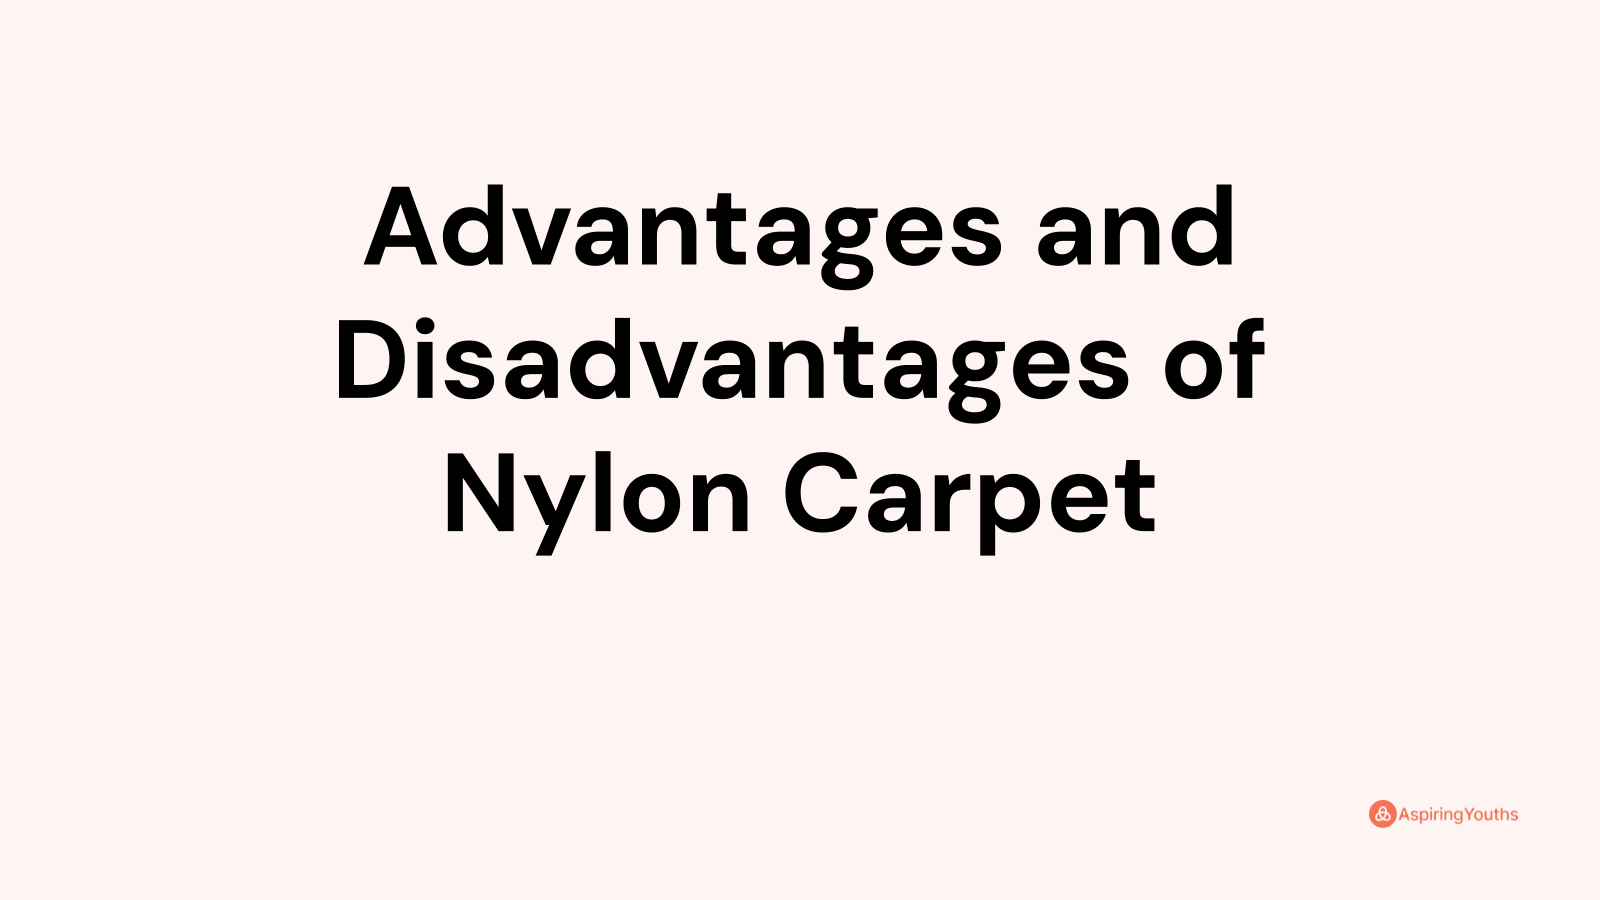 Advantages and disadvantages of Nylon Carpet